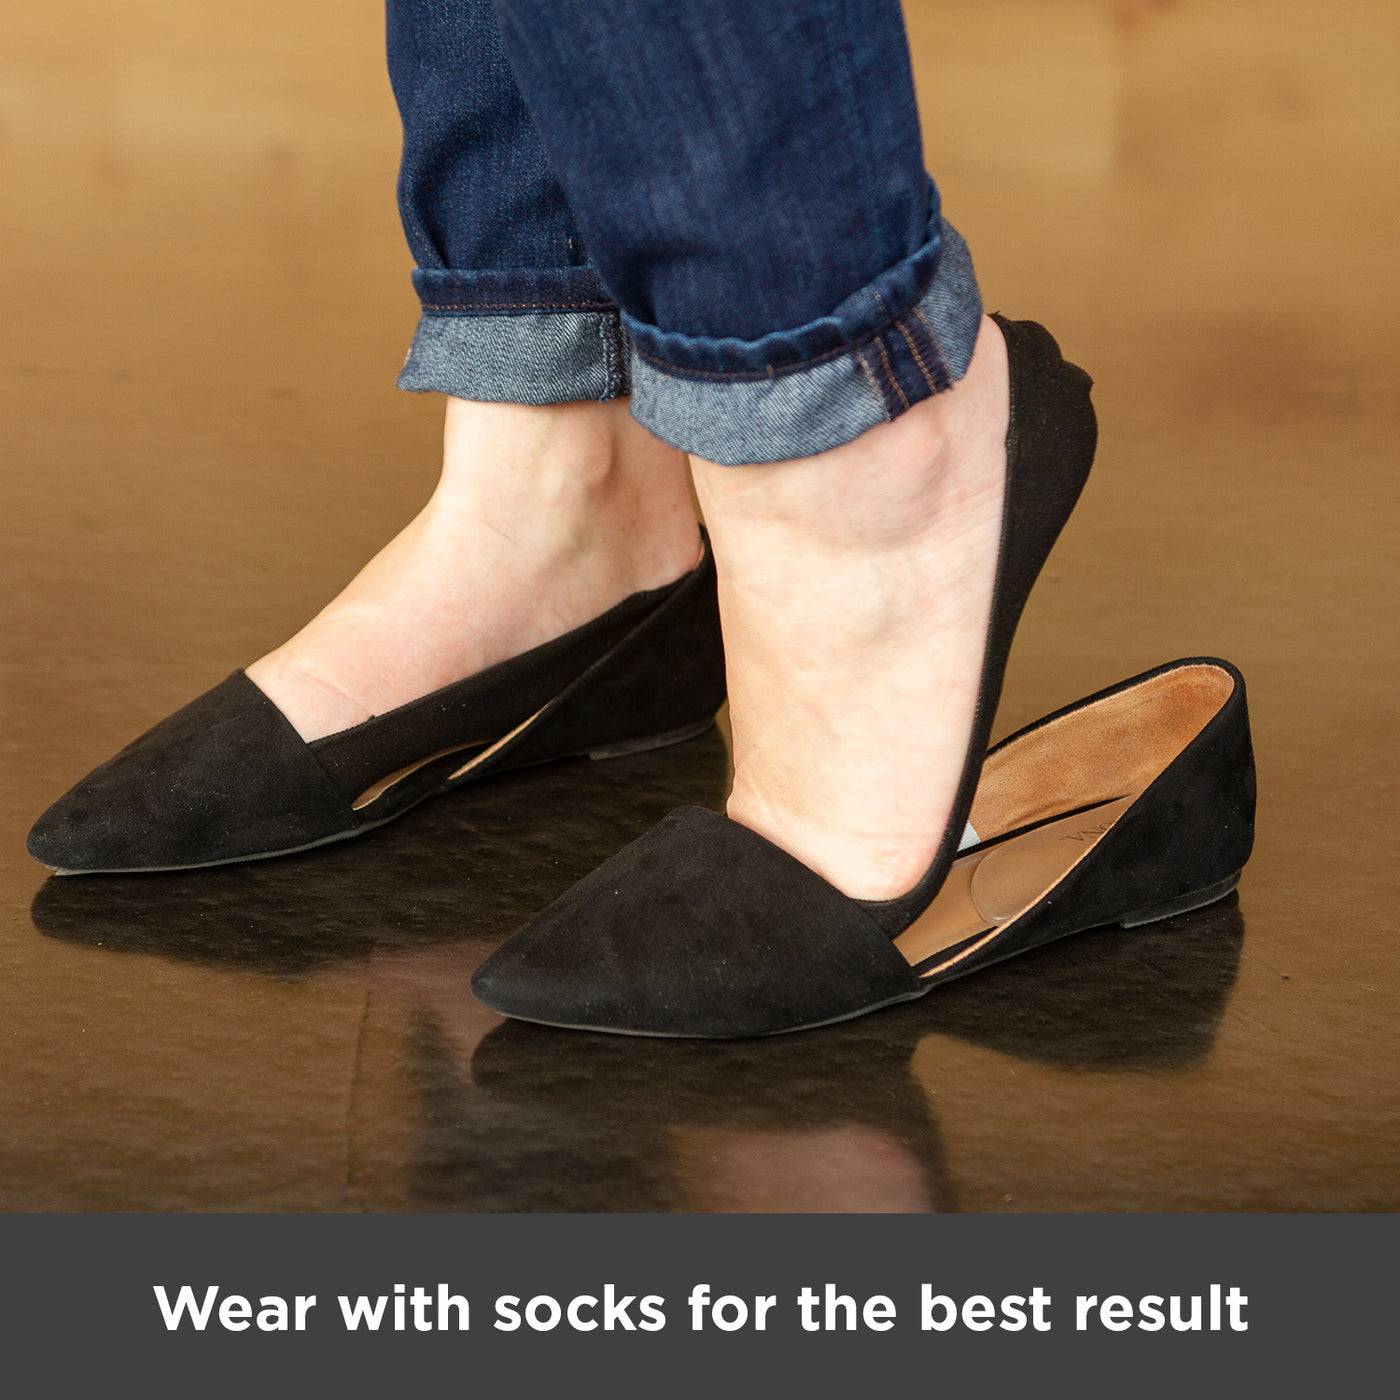 heel cushion inserts reusable soft shoe| Alibaba.com